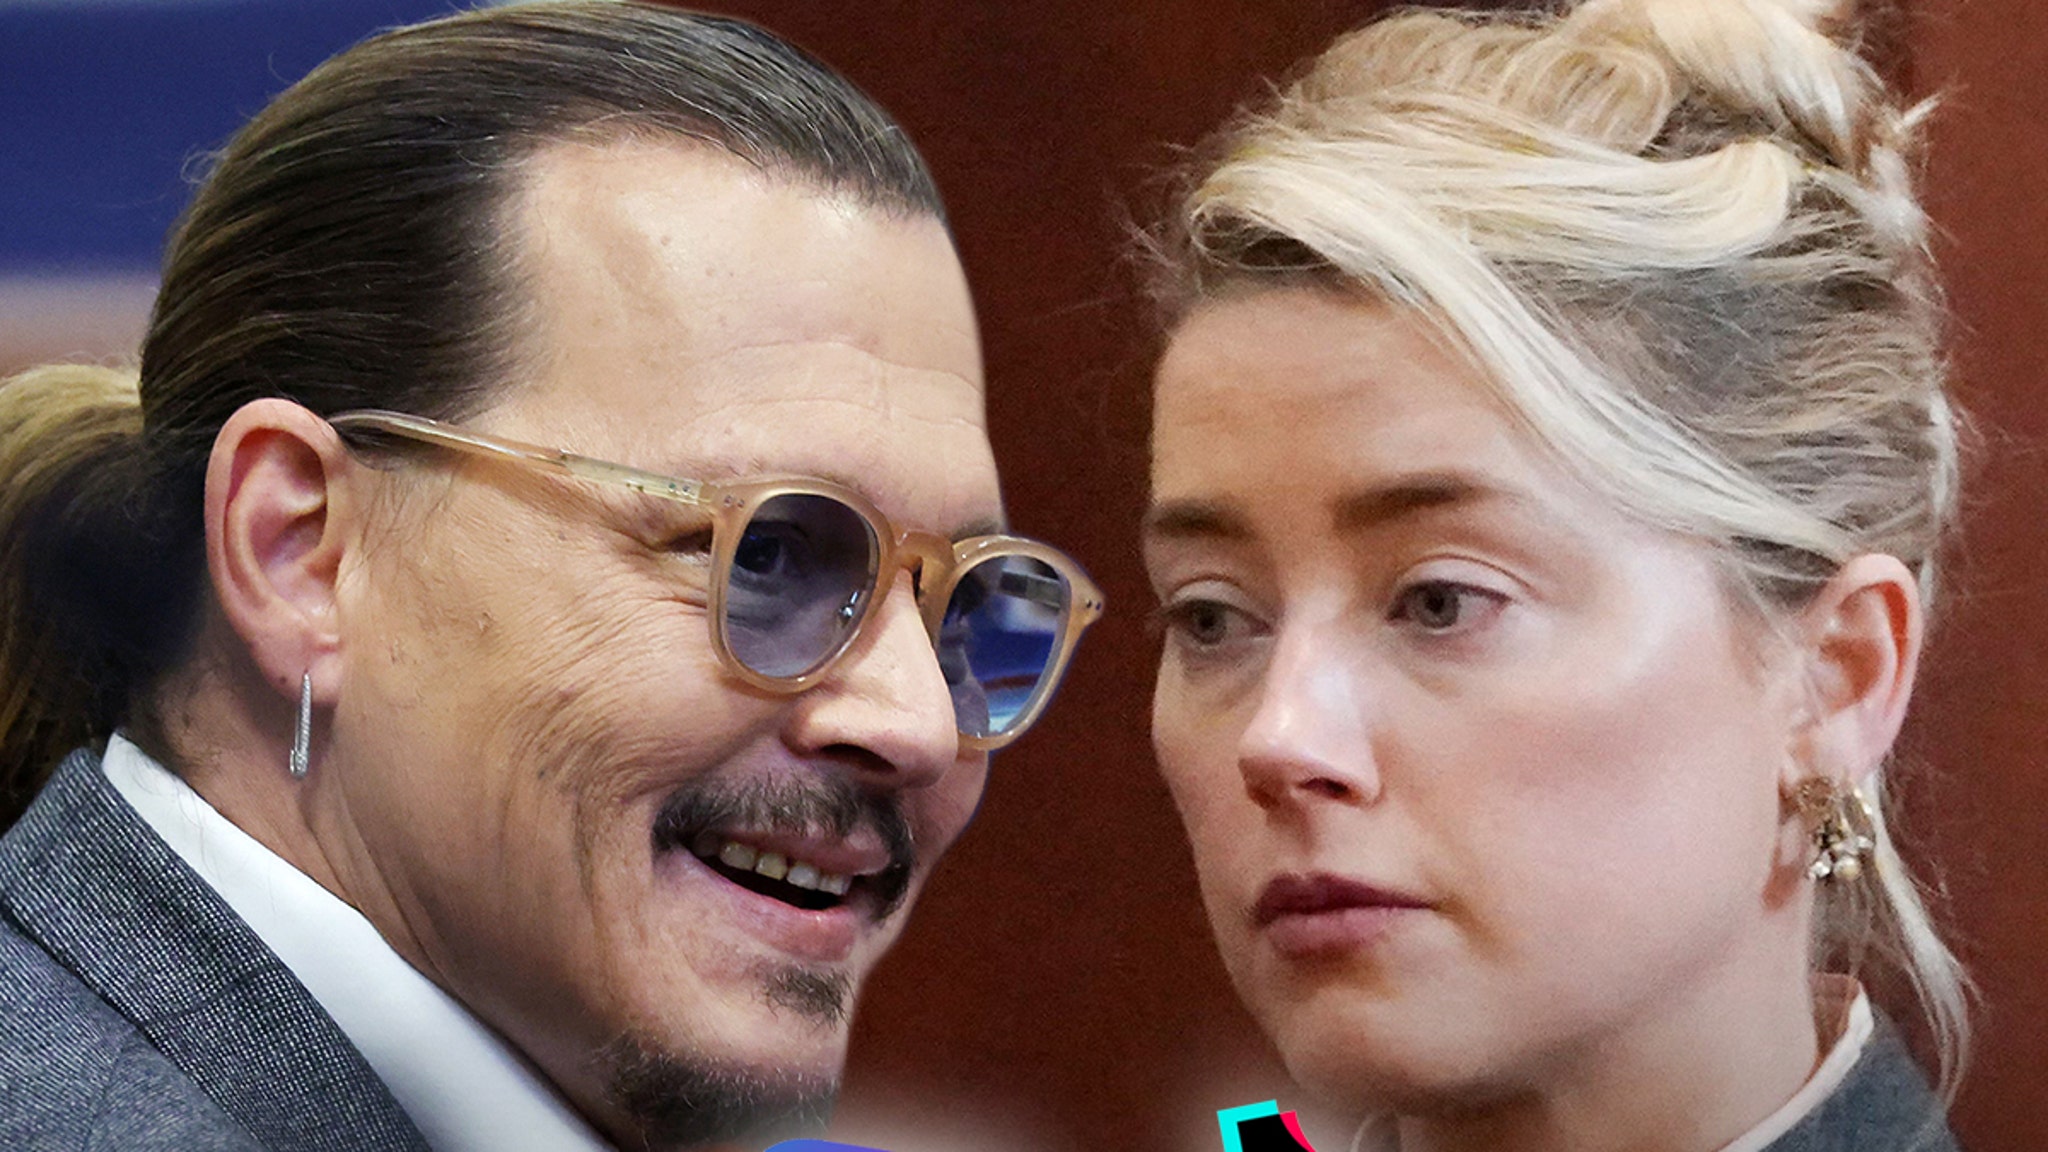 Johnny Depp Social Media Support During Trial Measured in the Billions